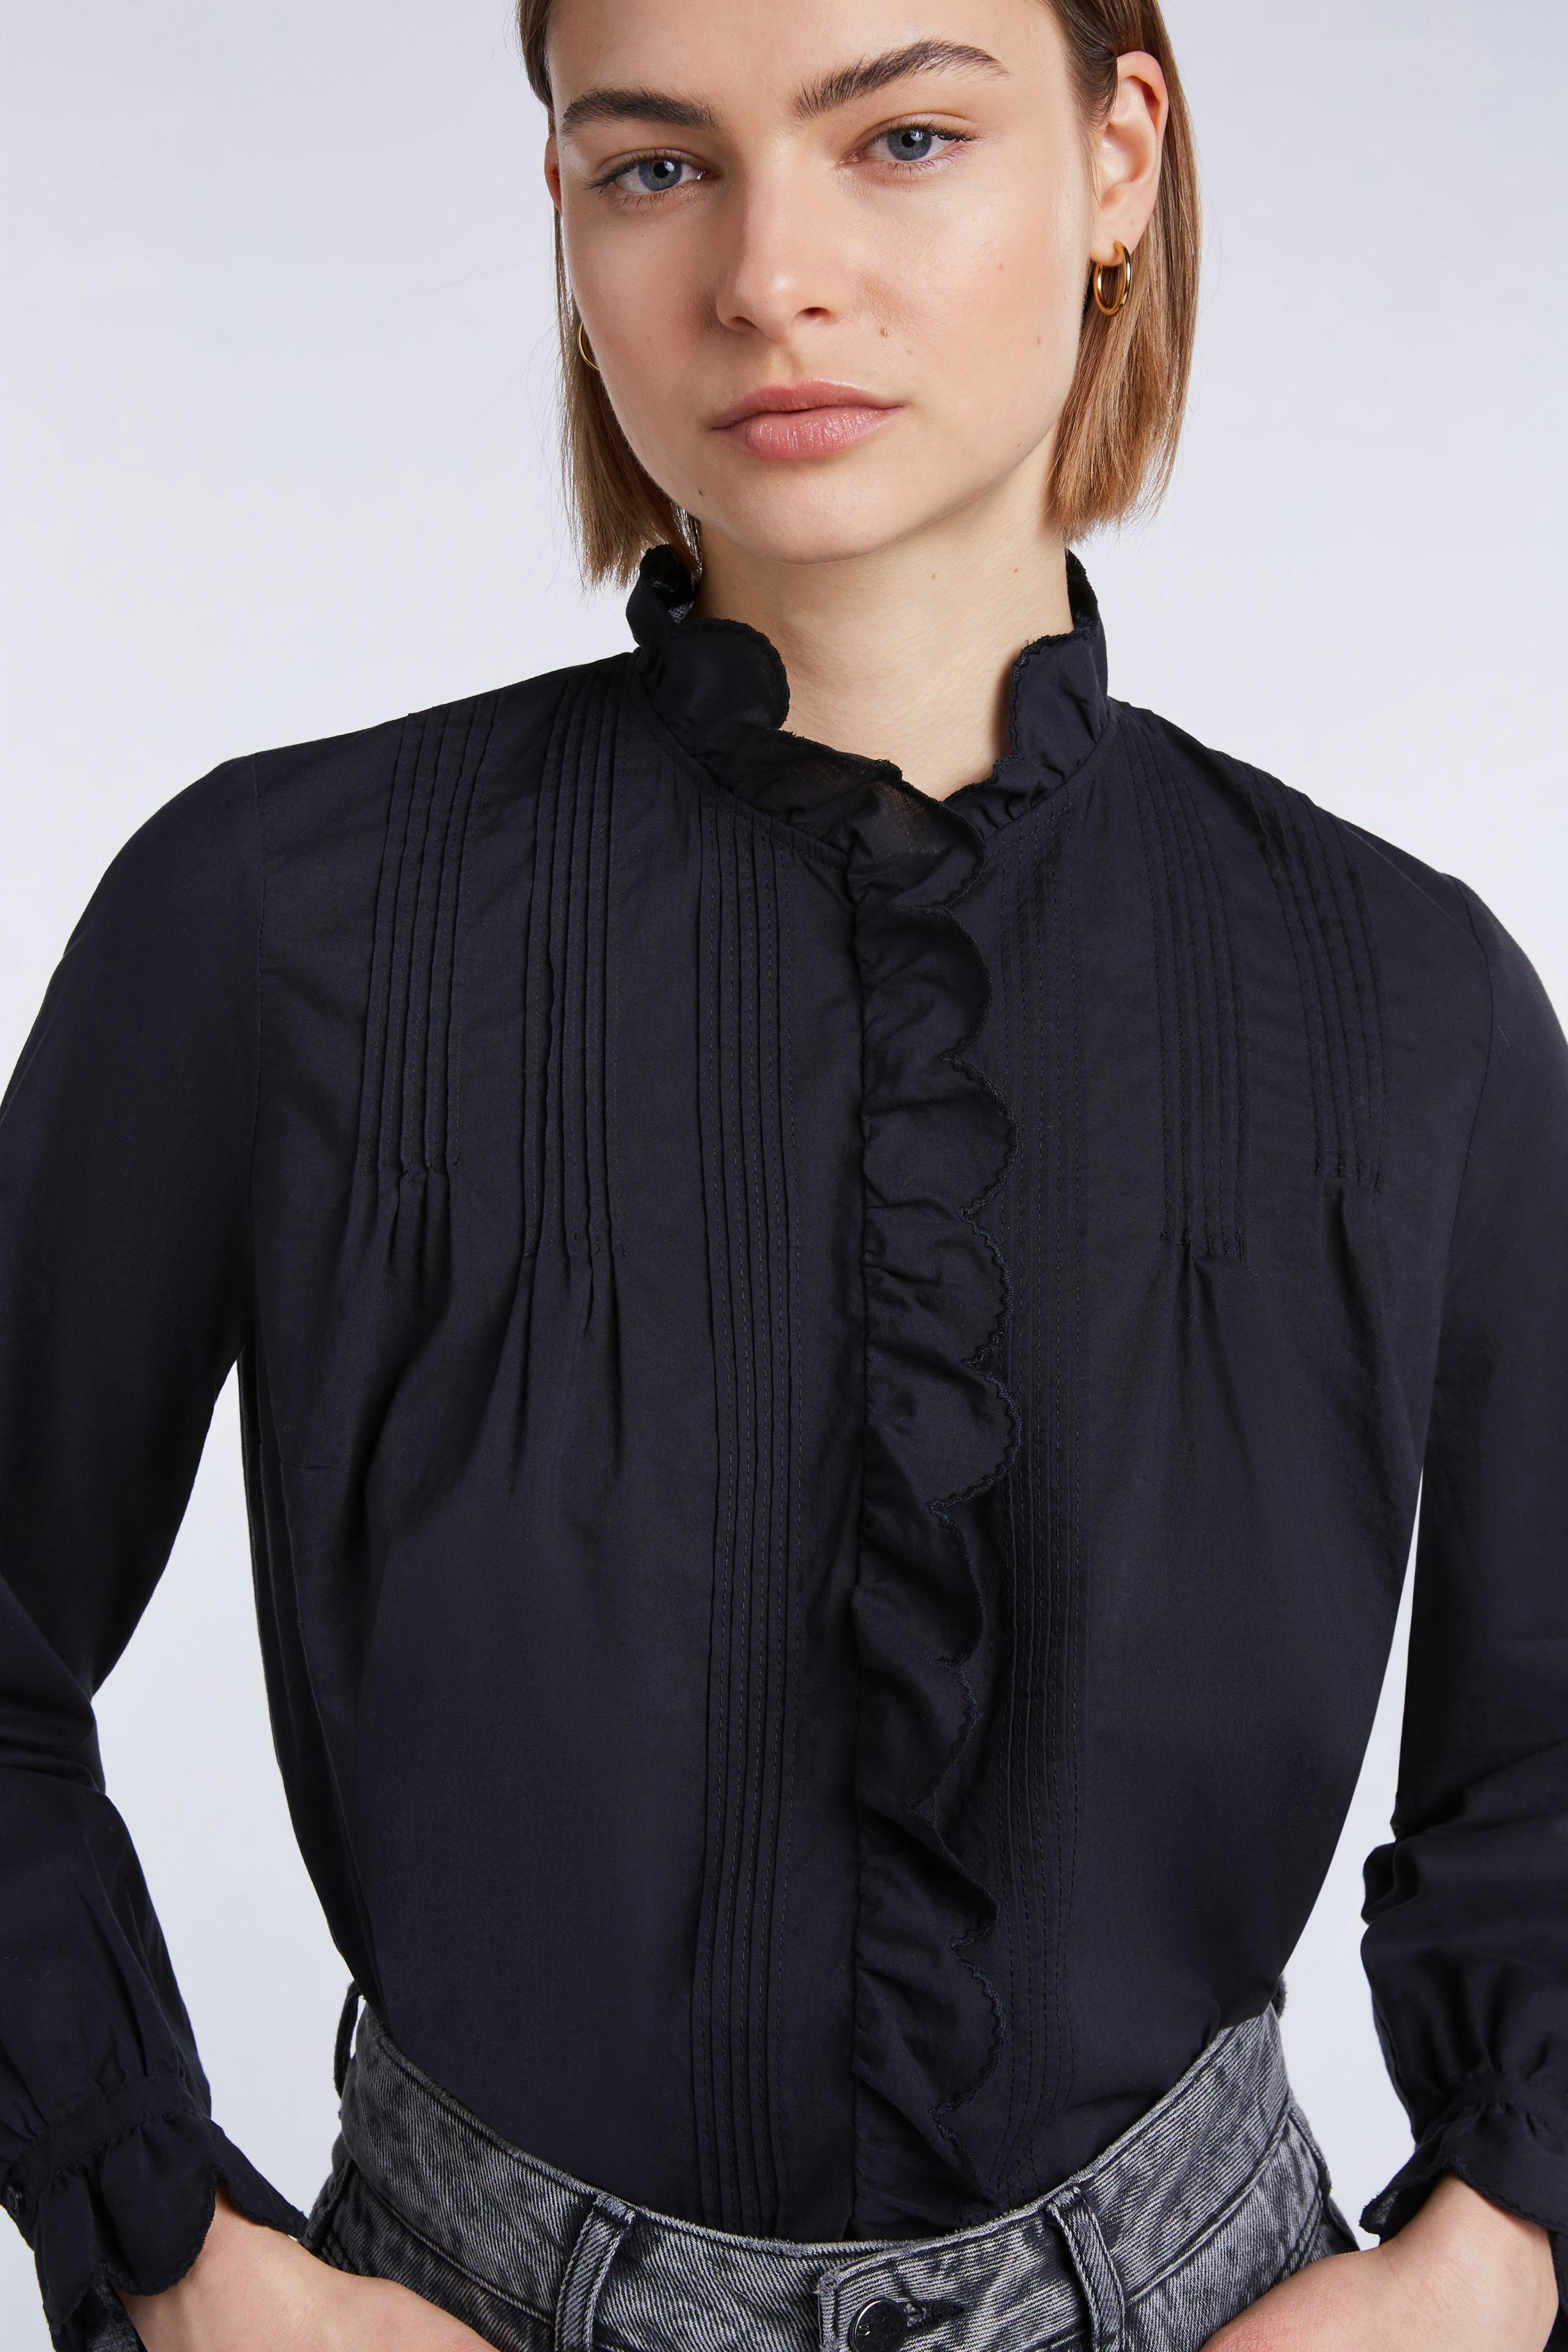 Claire prijs Regenjas Set dames blouse 71040 zwart online kopen bij No Sense. 71040-9990 | Where  jeans meet fashion